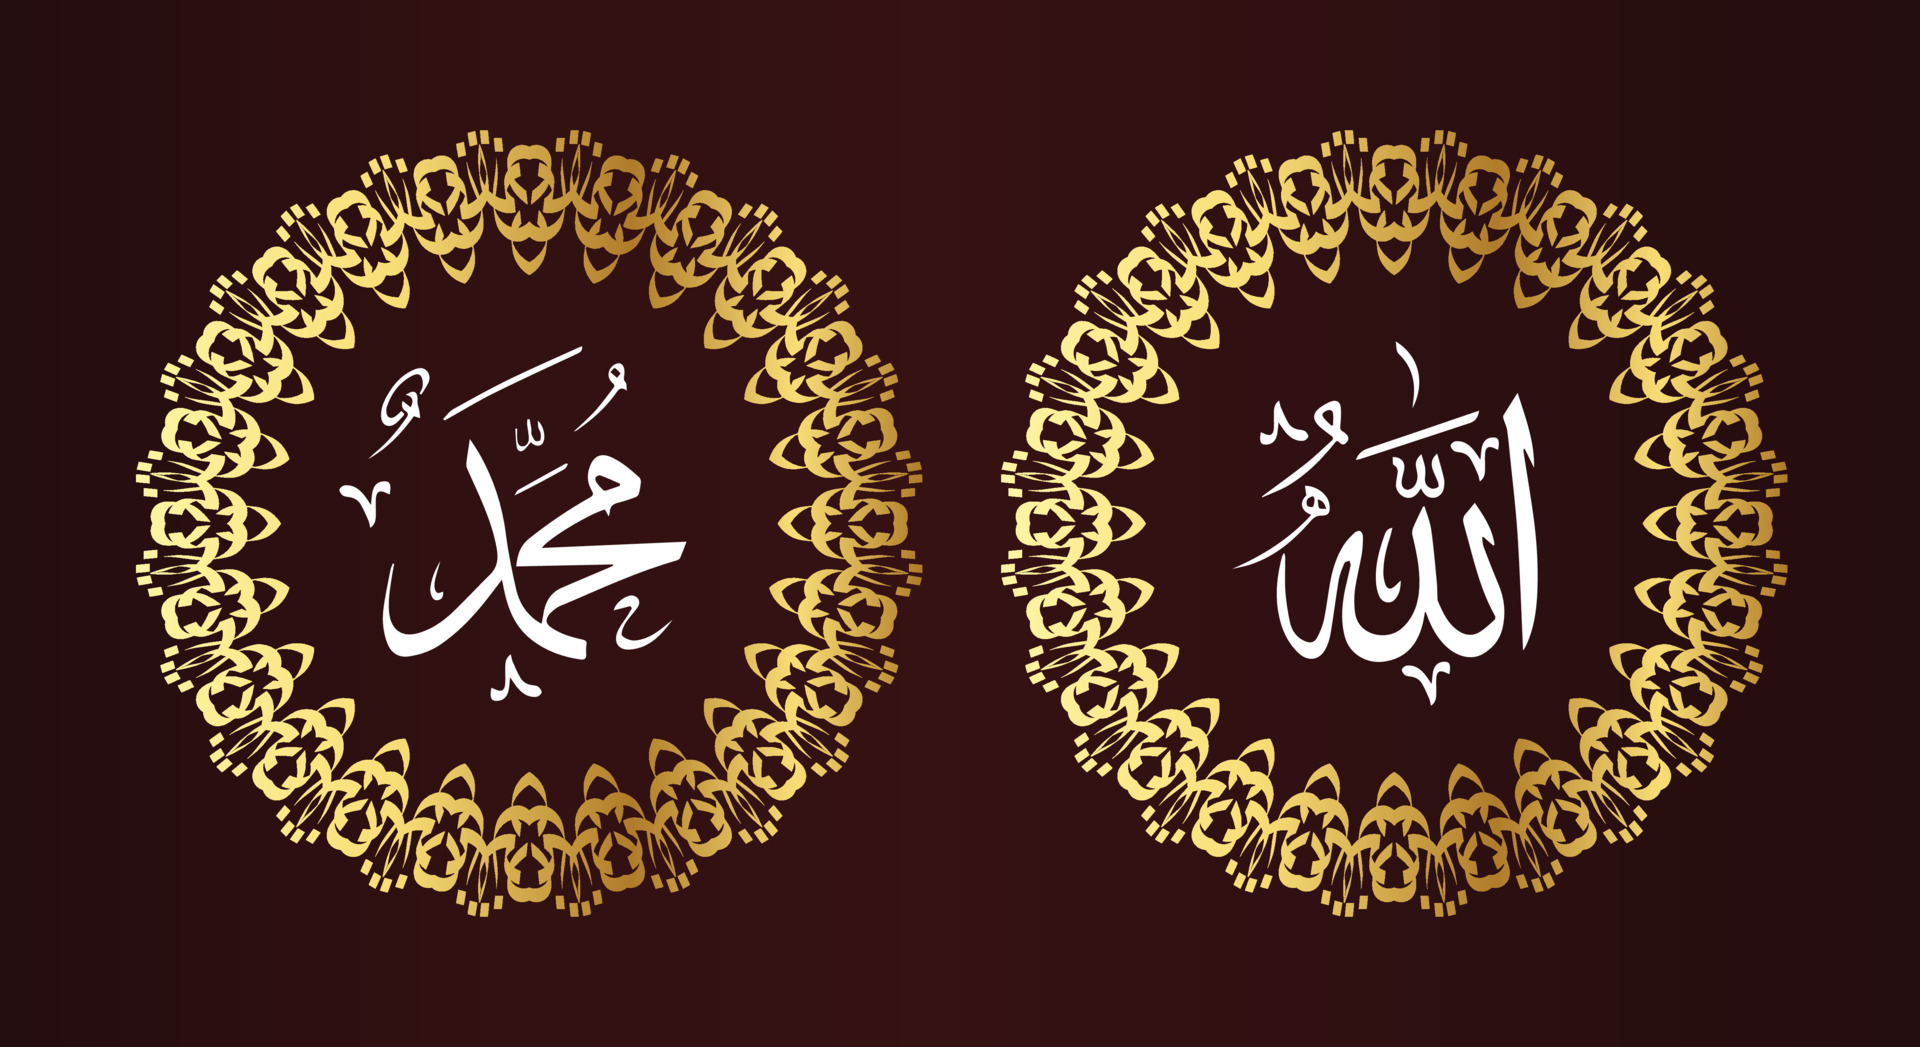 Ya Allah Wallpaper Background Images New Beautiful Islamic Stock  Illustration  Illustration of logo drawing 228511984